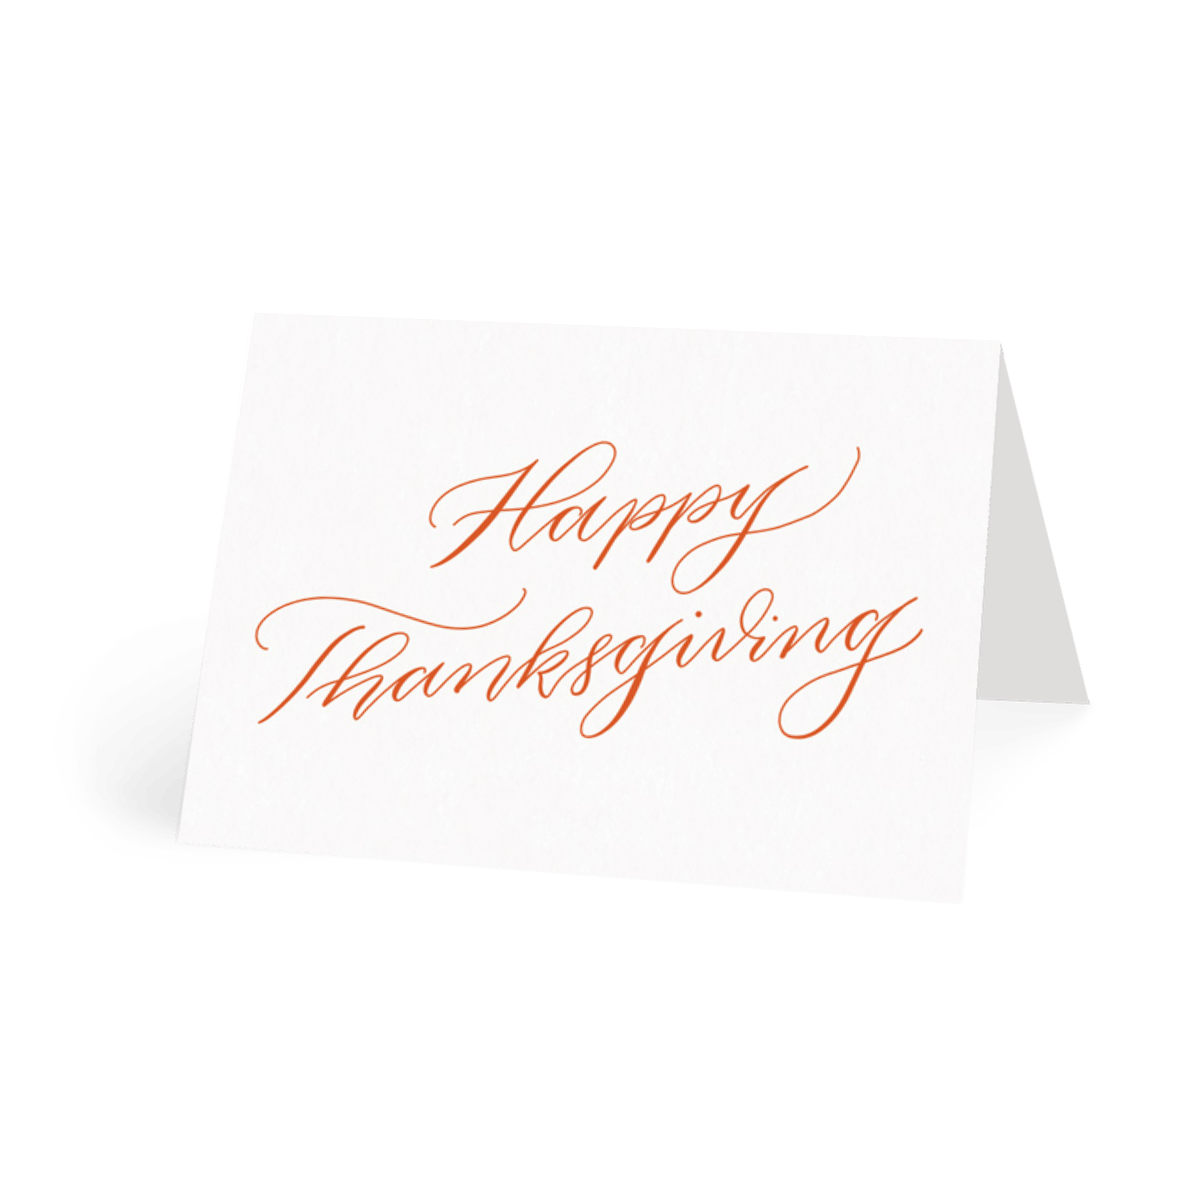 Happy Thanksgiving Calligraphy